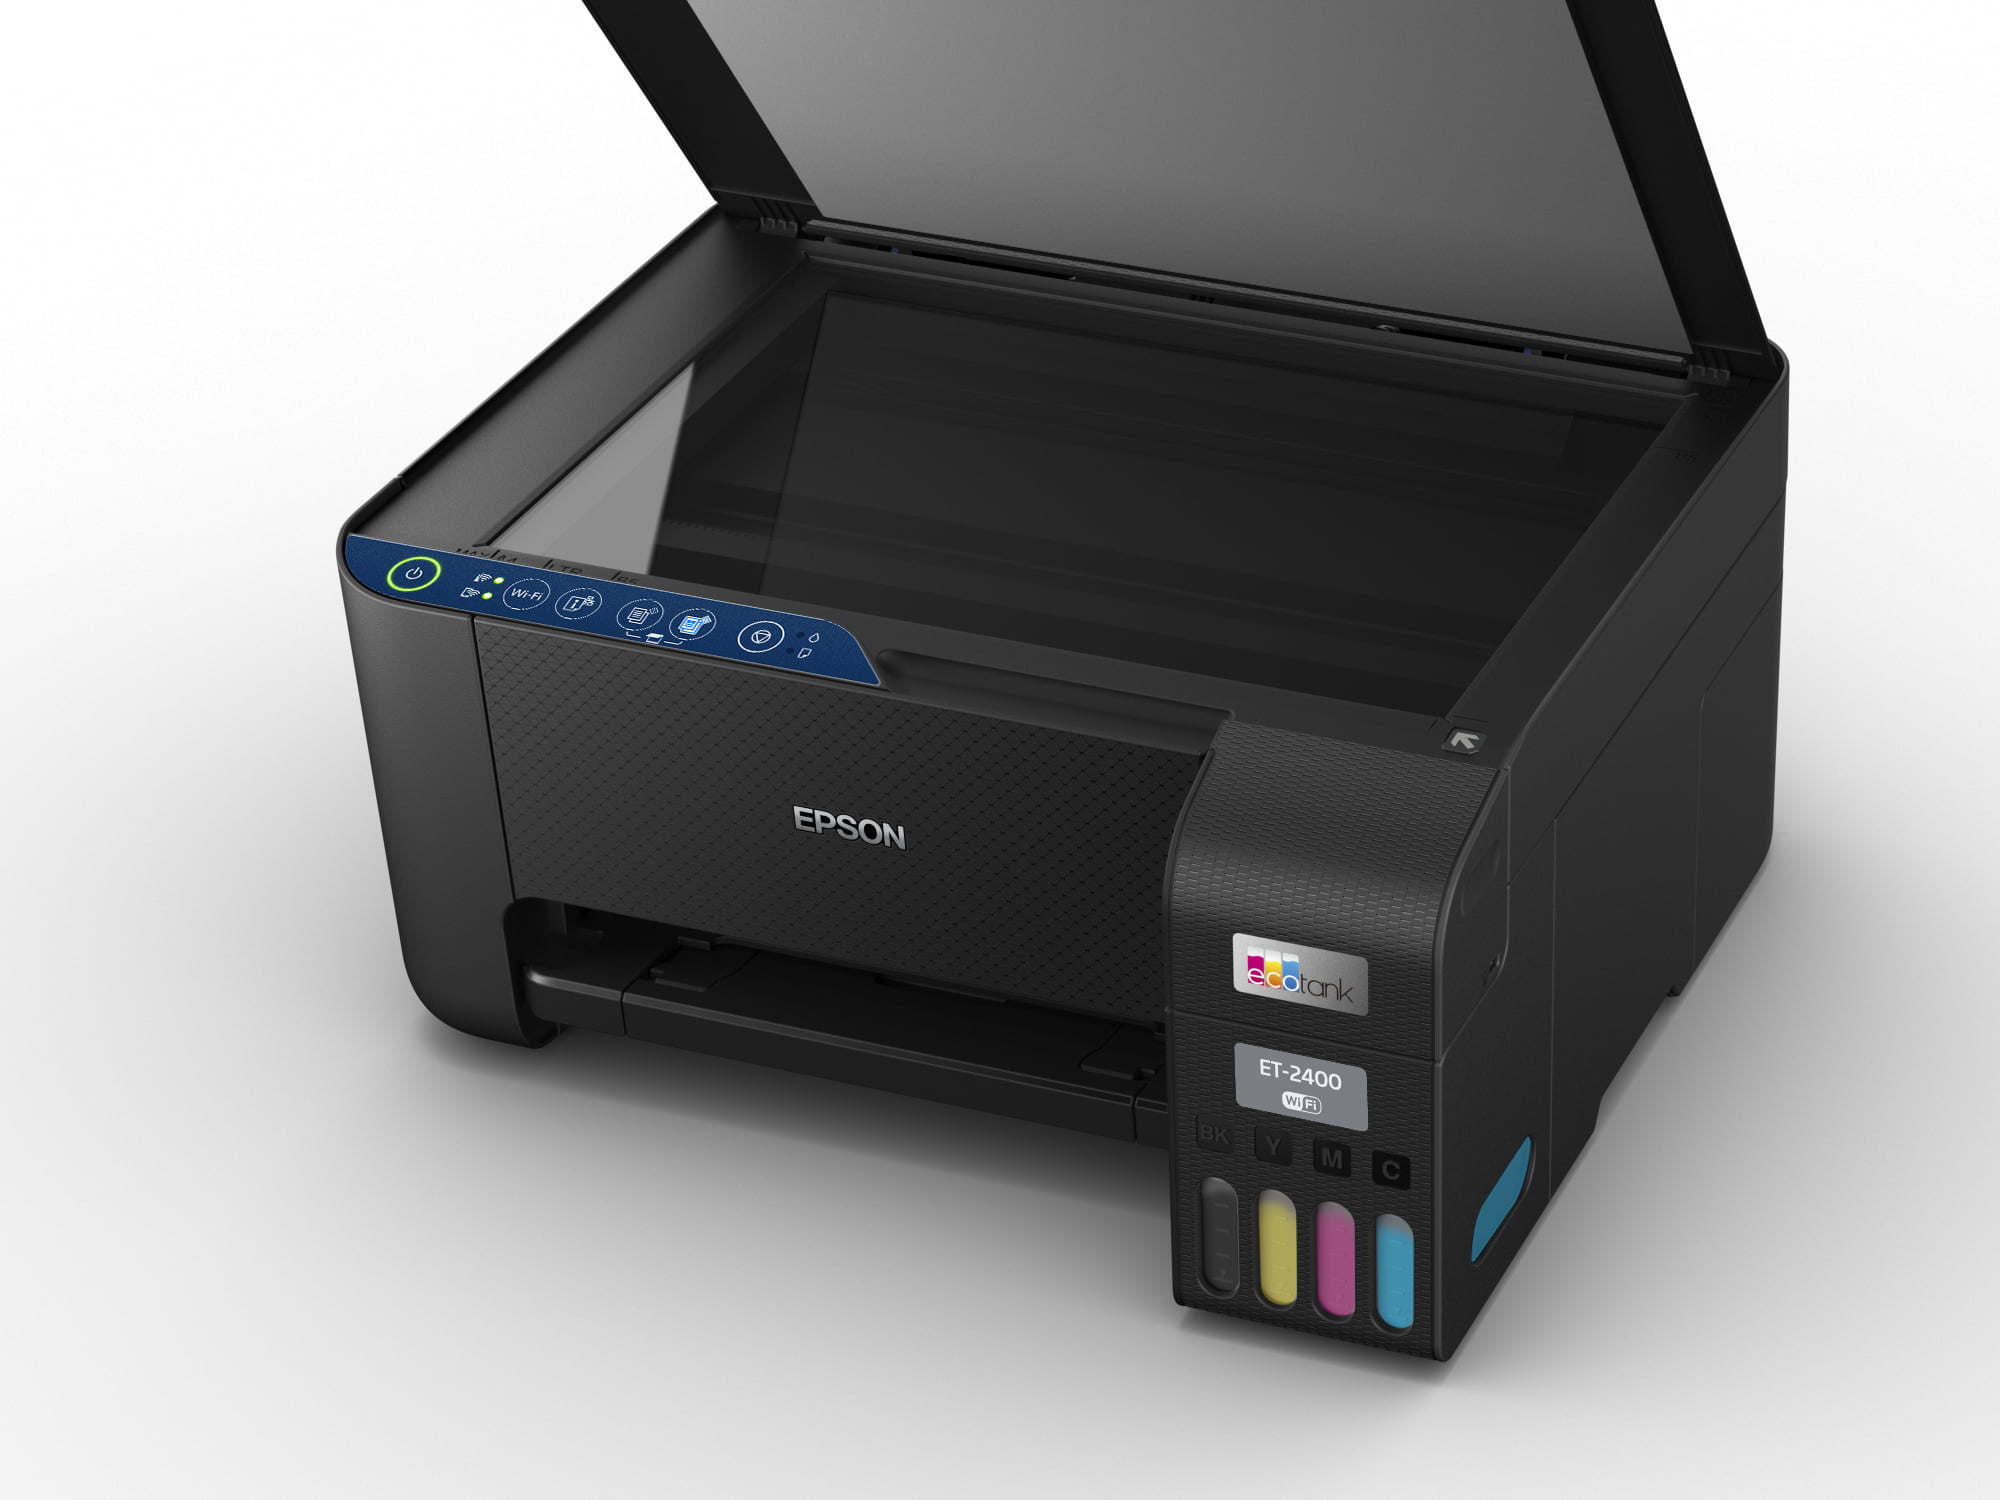 Epson EcoTank ET-2400 Wireless Color All-in-One Printer - $169.99 @Walmart